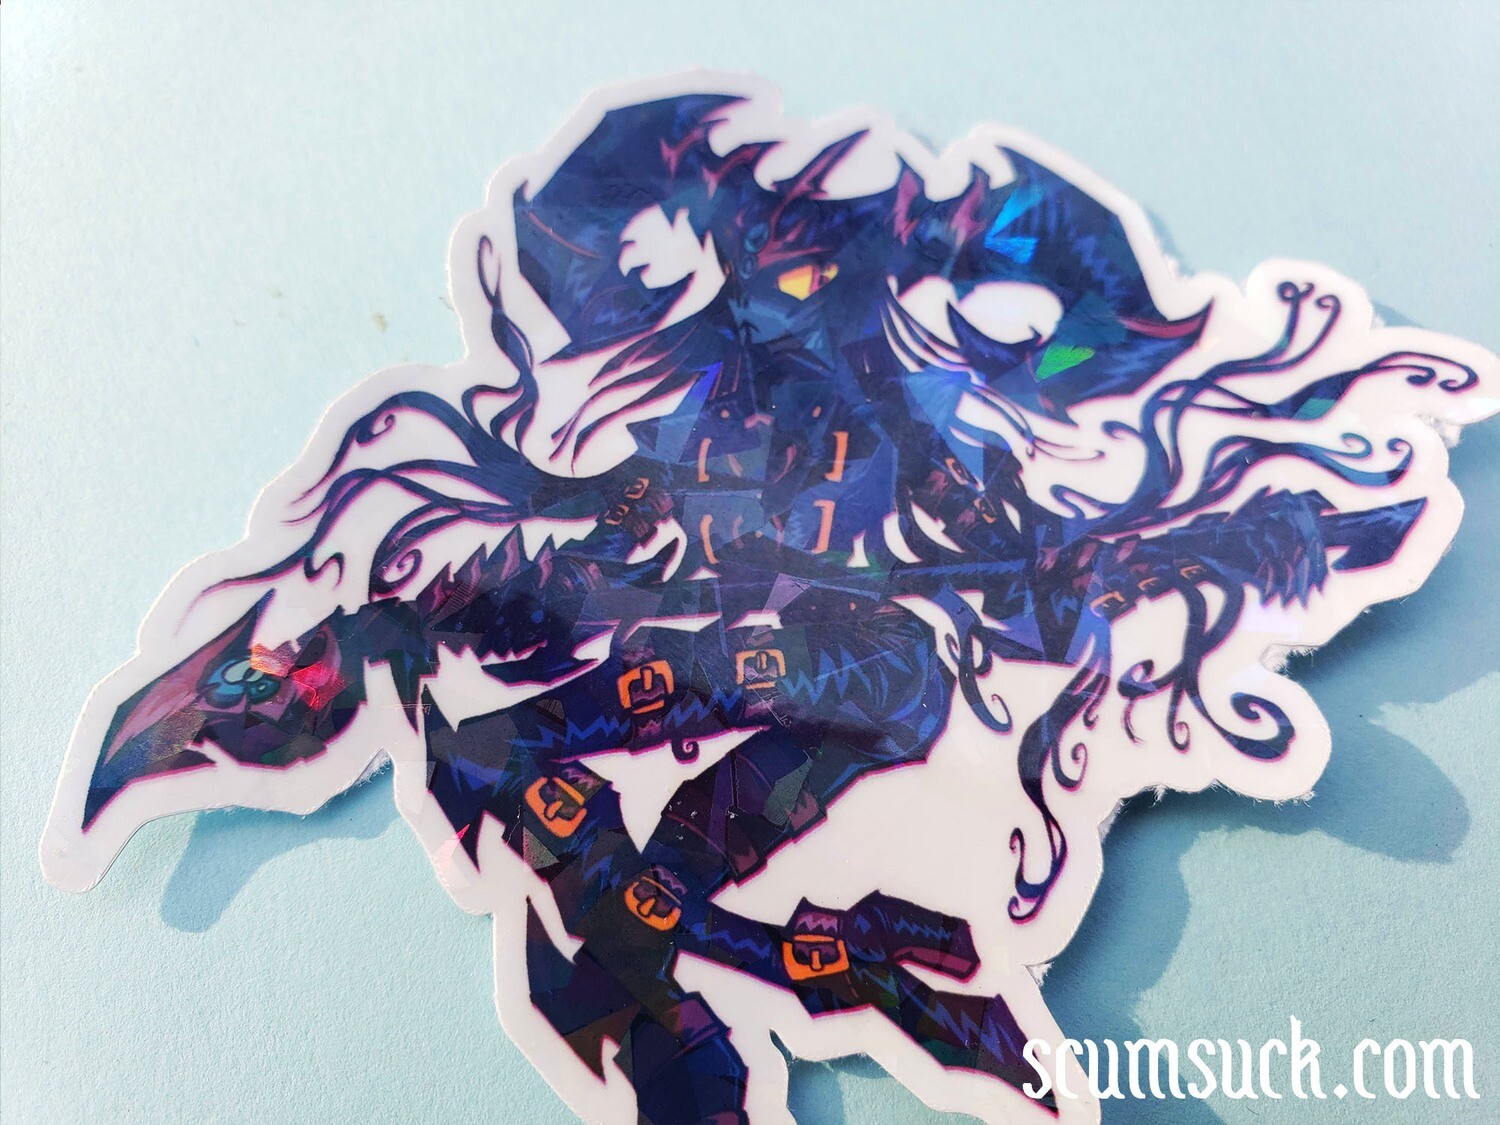 Dark Magician of Black Chaos Sticker (3")